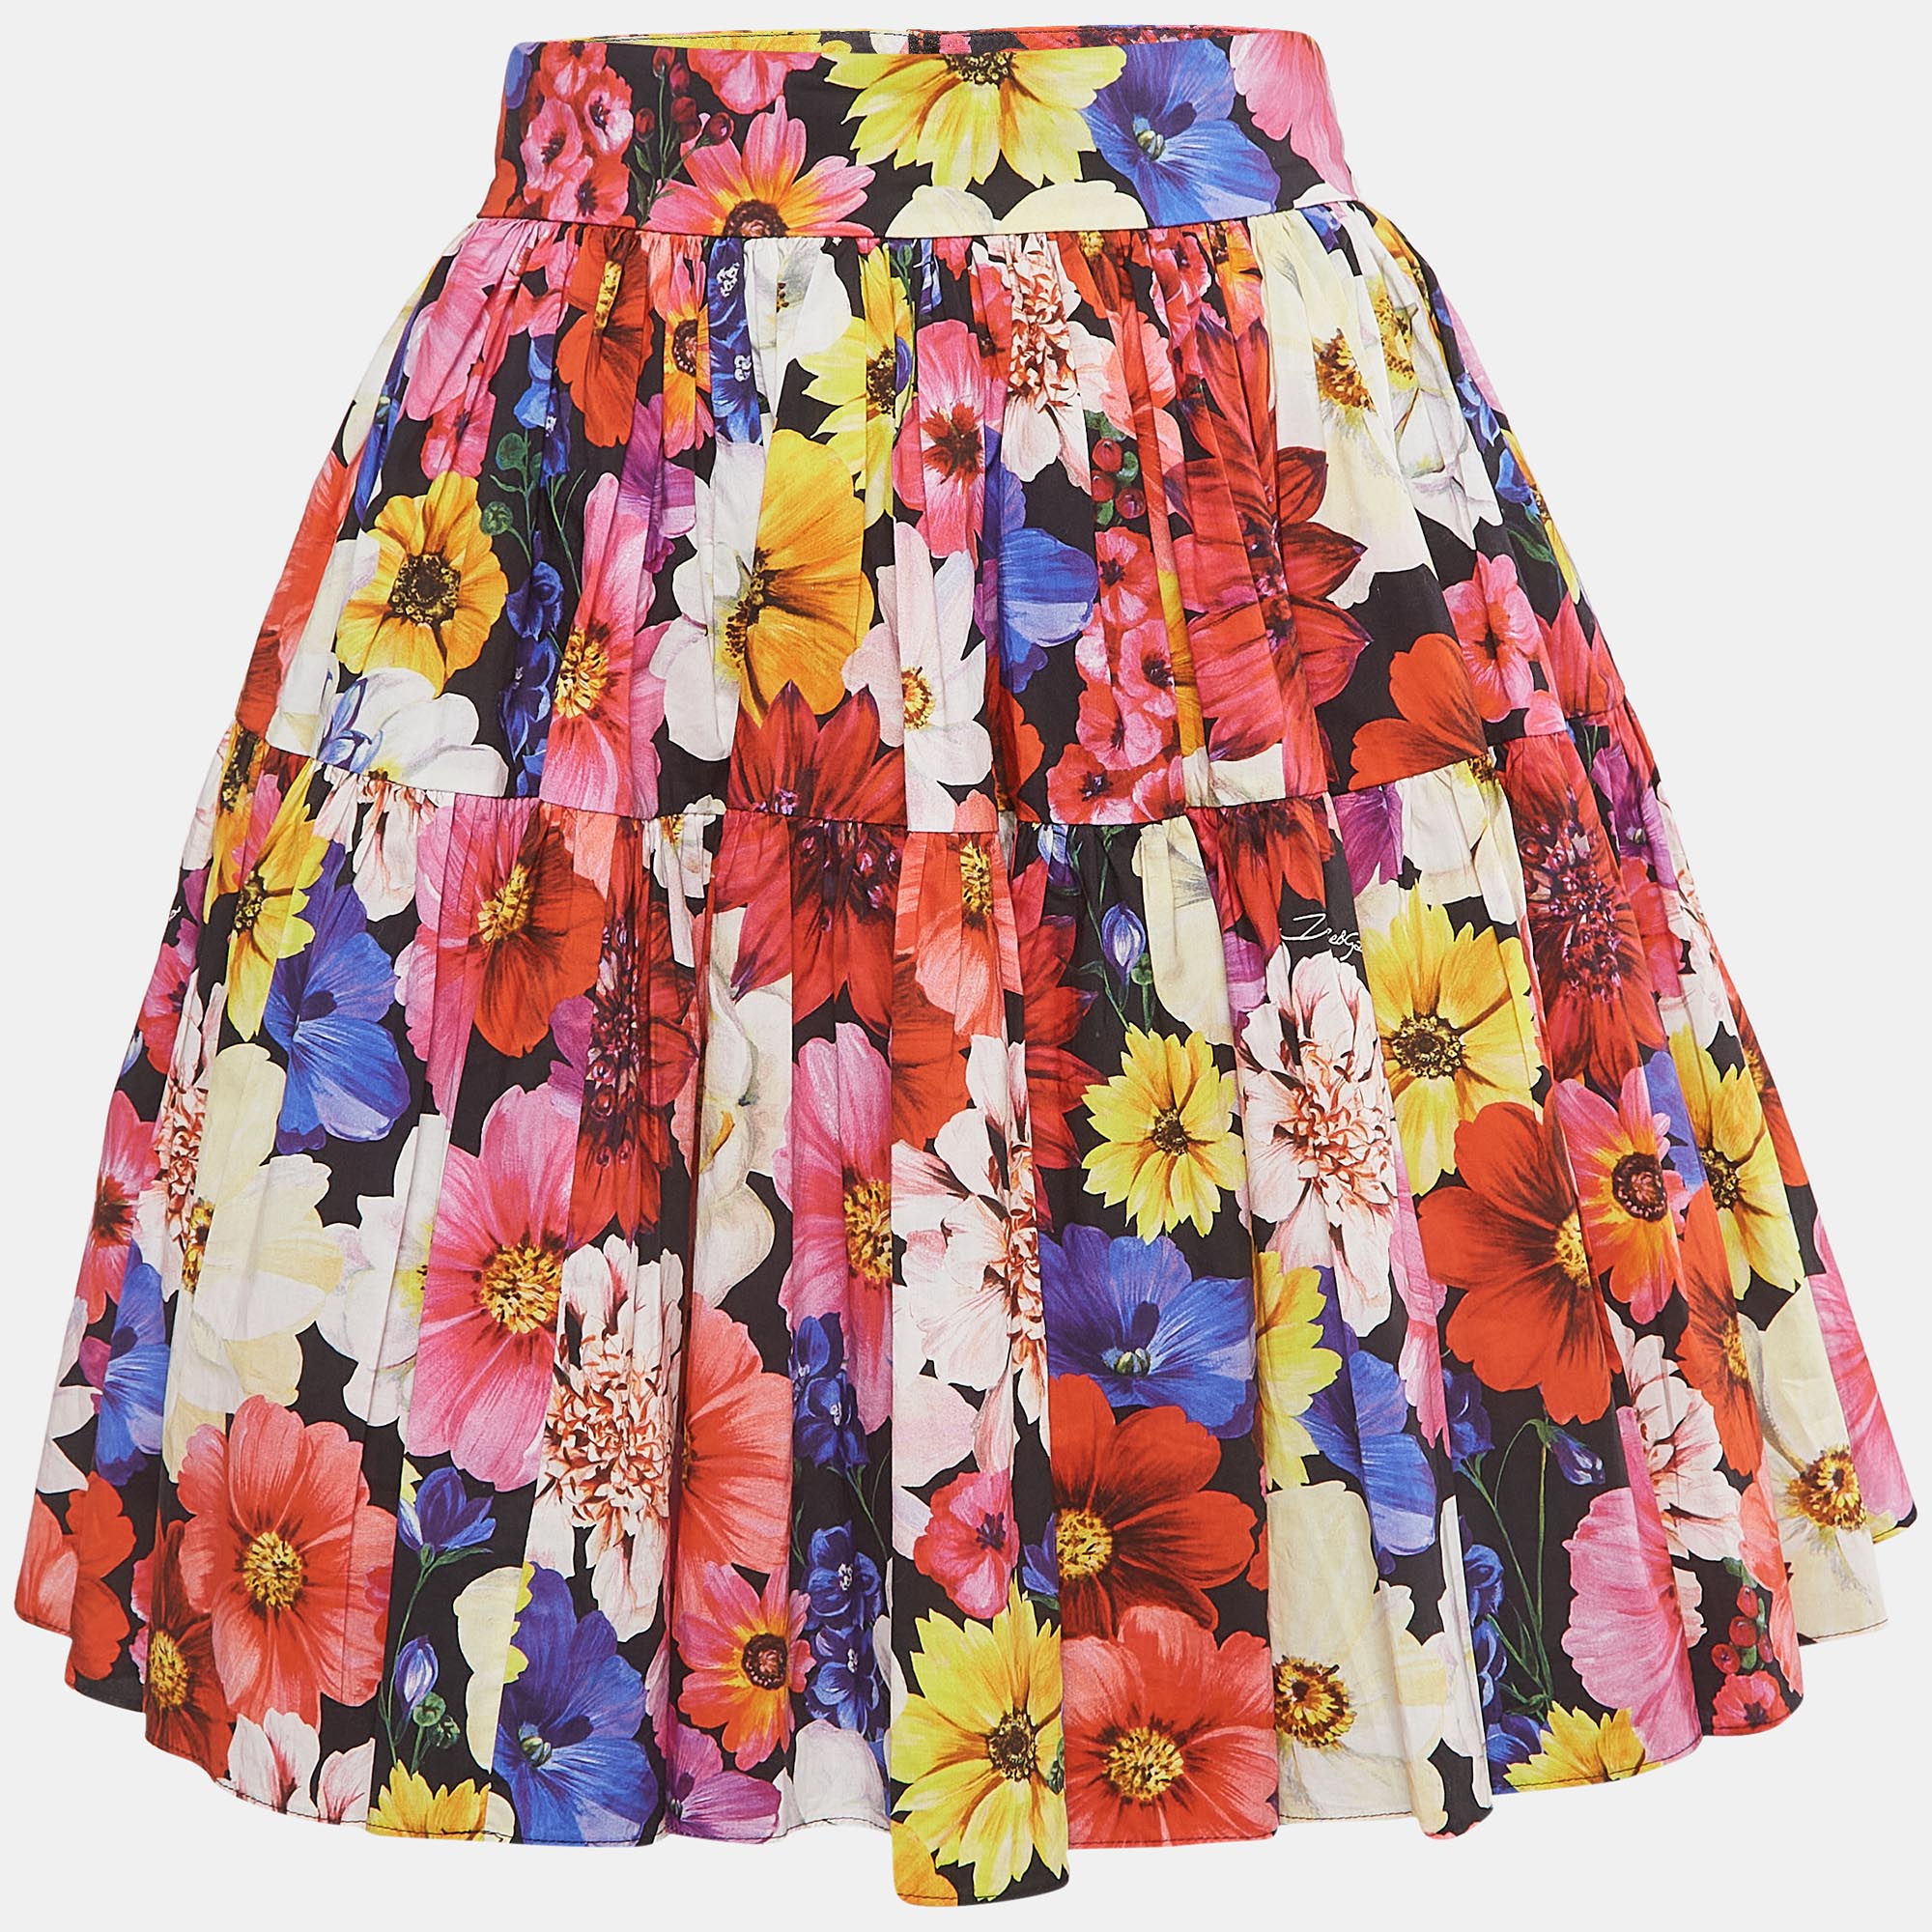 Dolce & gabbana multicolor floral printed cotton poplin short skirt s